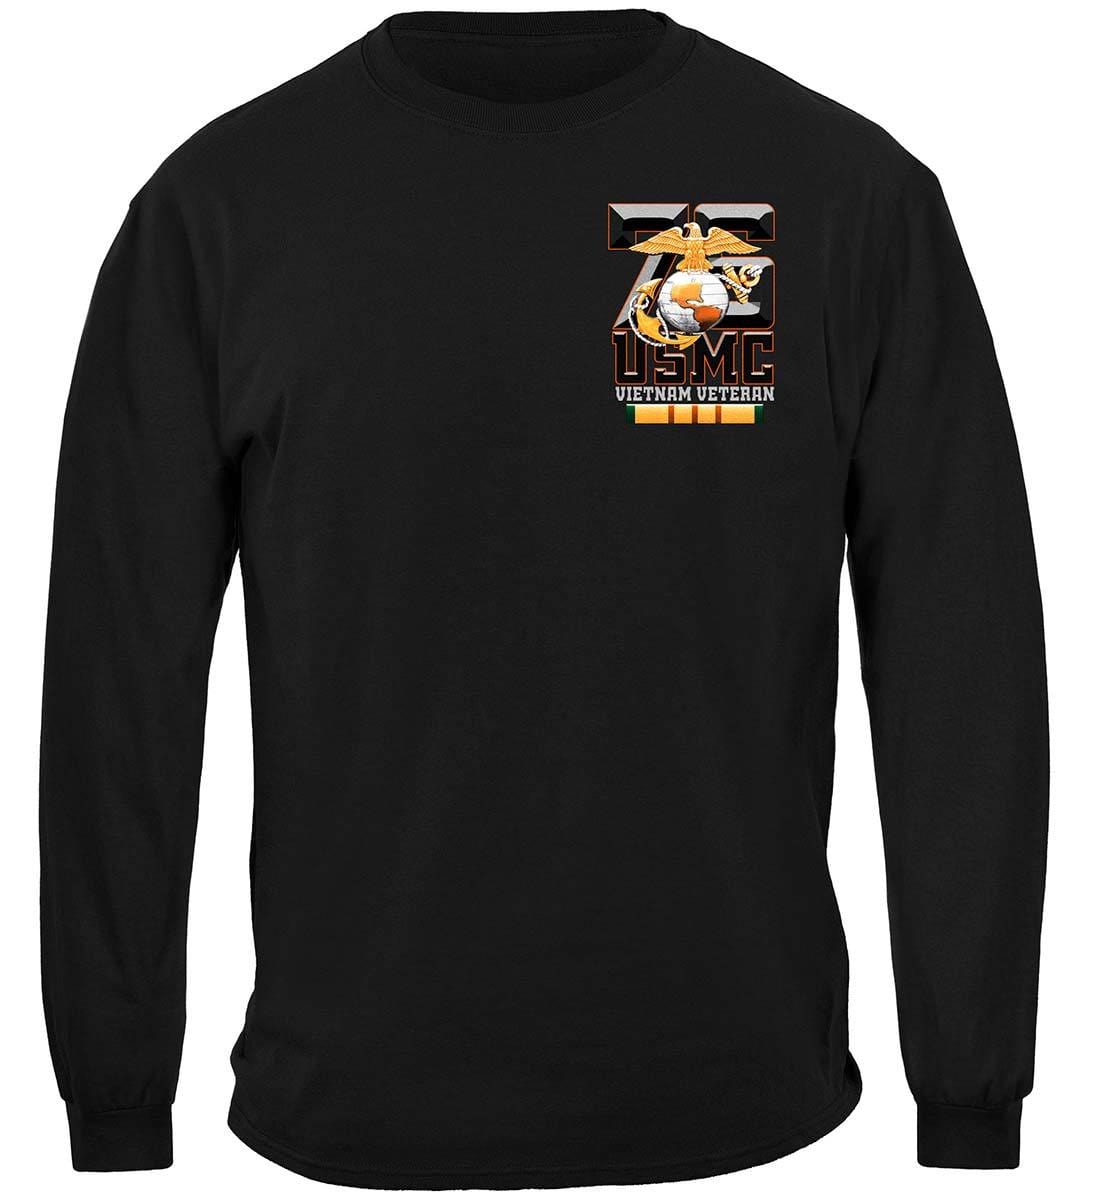 USMC Vietnam Vet Premium T-Shirt